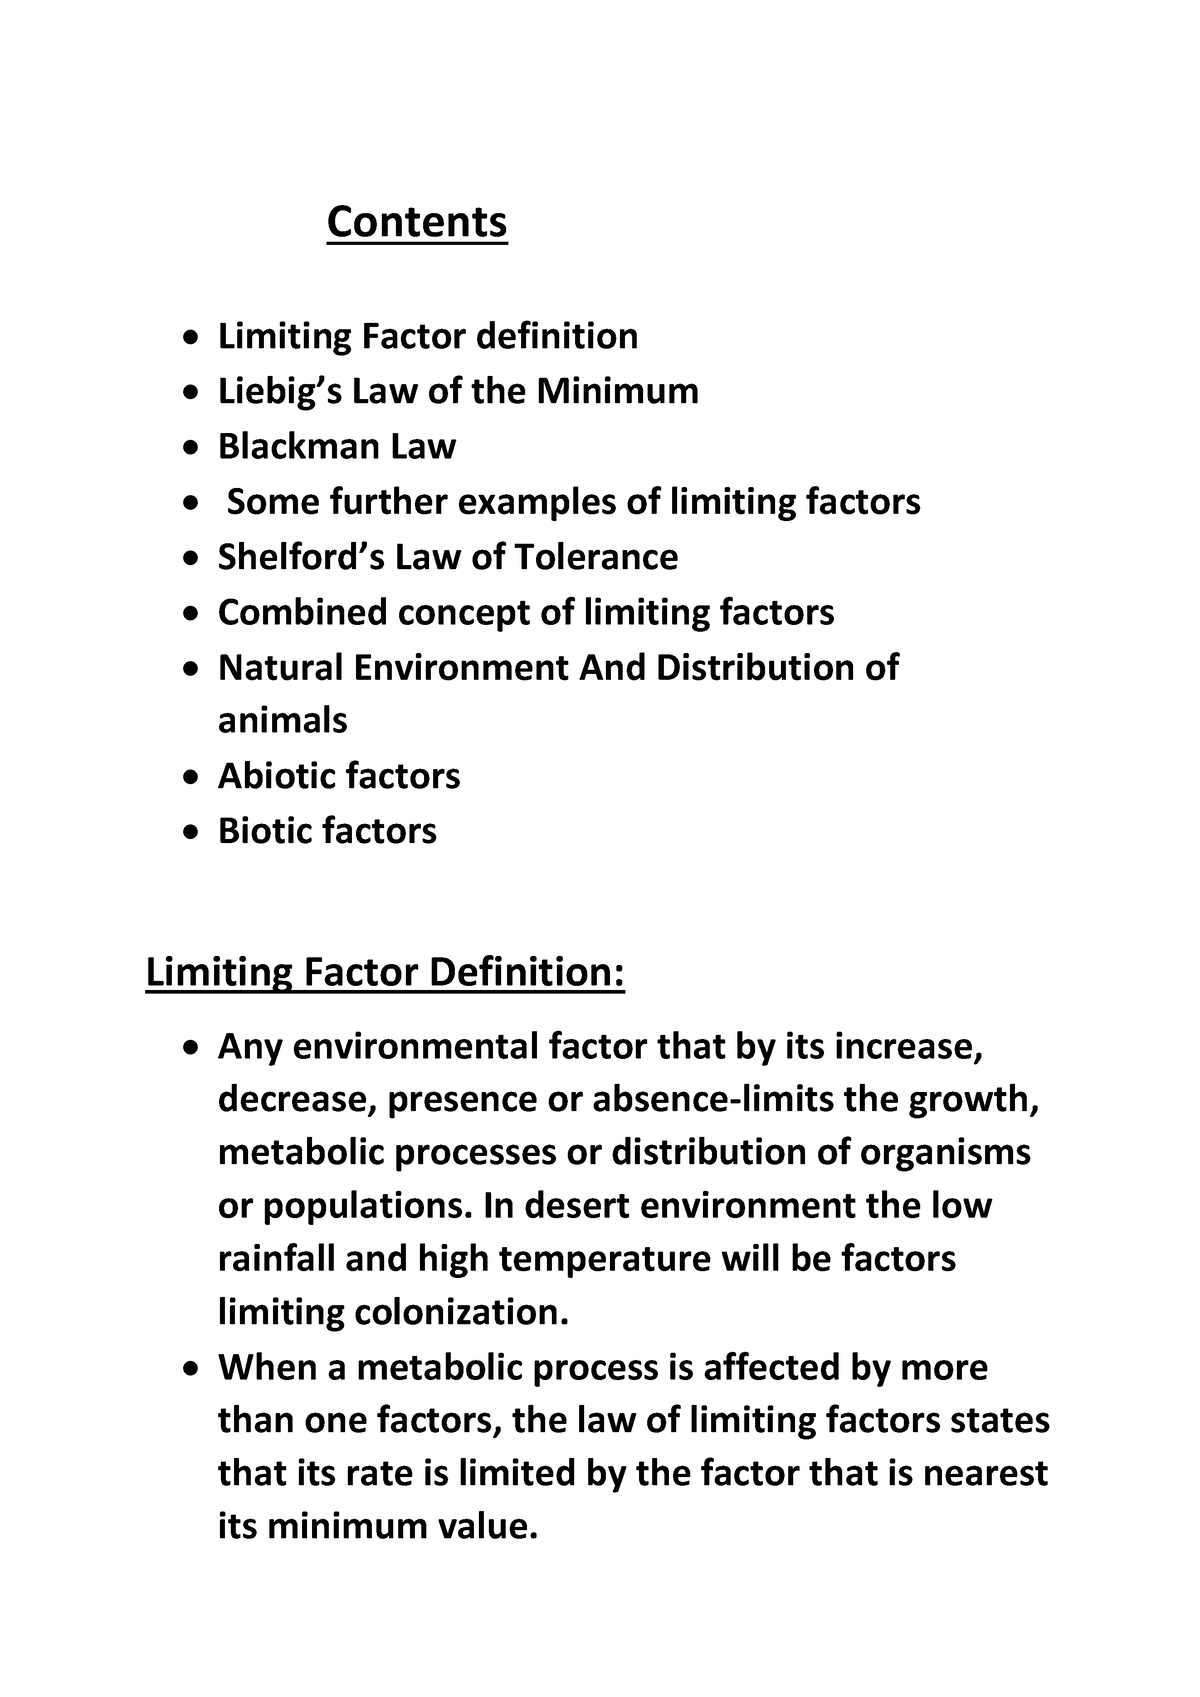 limiting-factors-lecture-notes-5-contents-limiting-factor